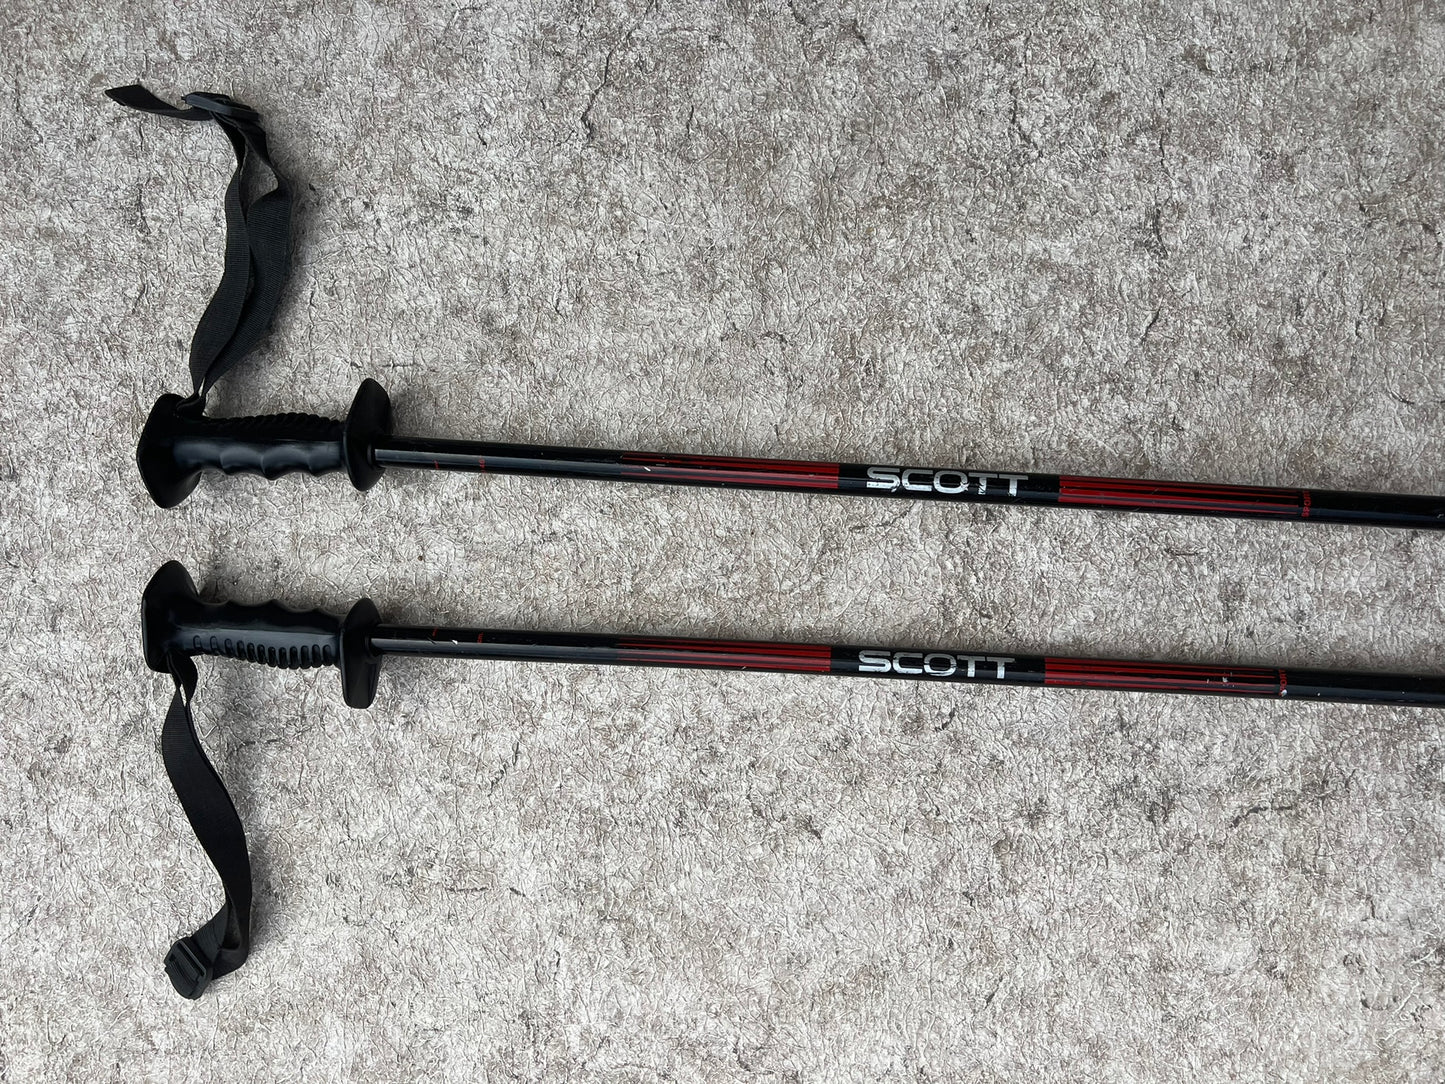 Ski Poles Adult Size 46 inch 115 cm Scott Red Grey Rubber Handles